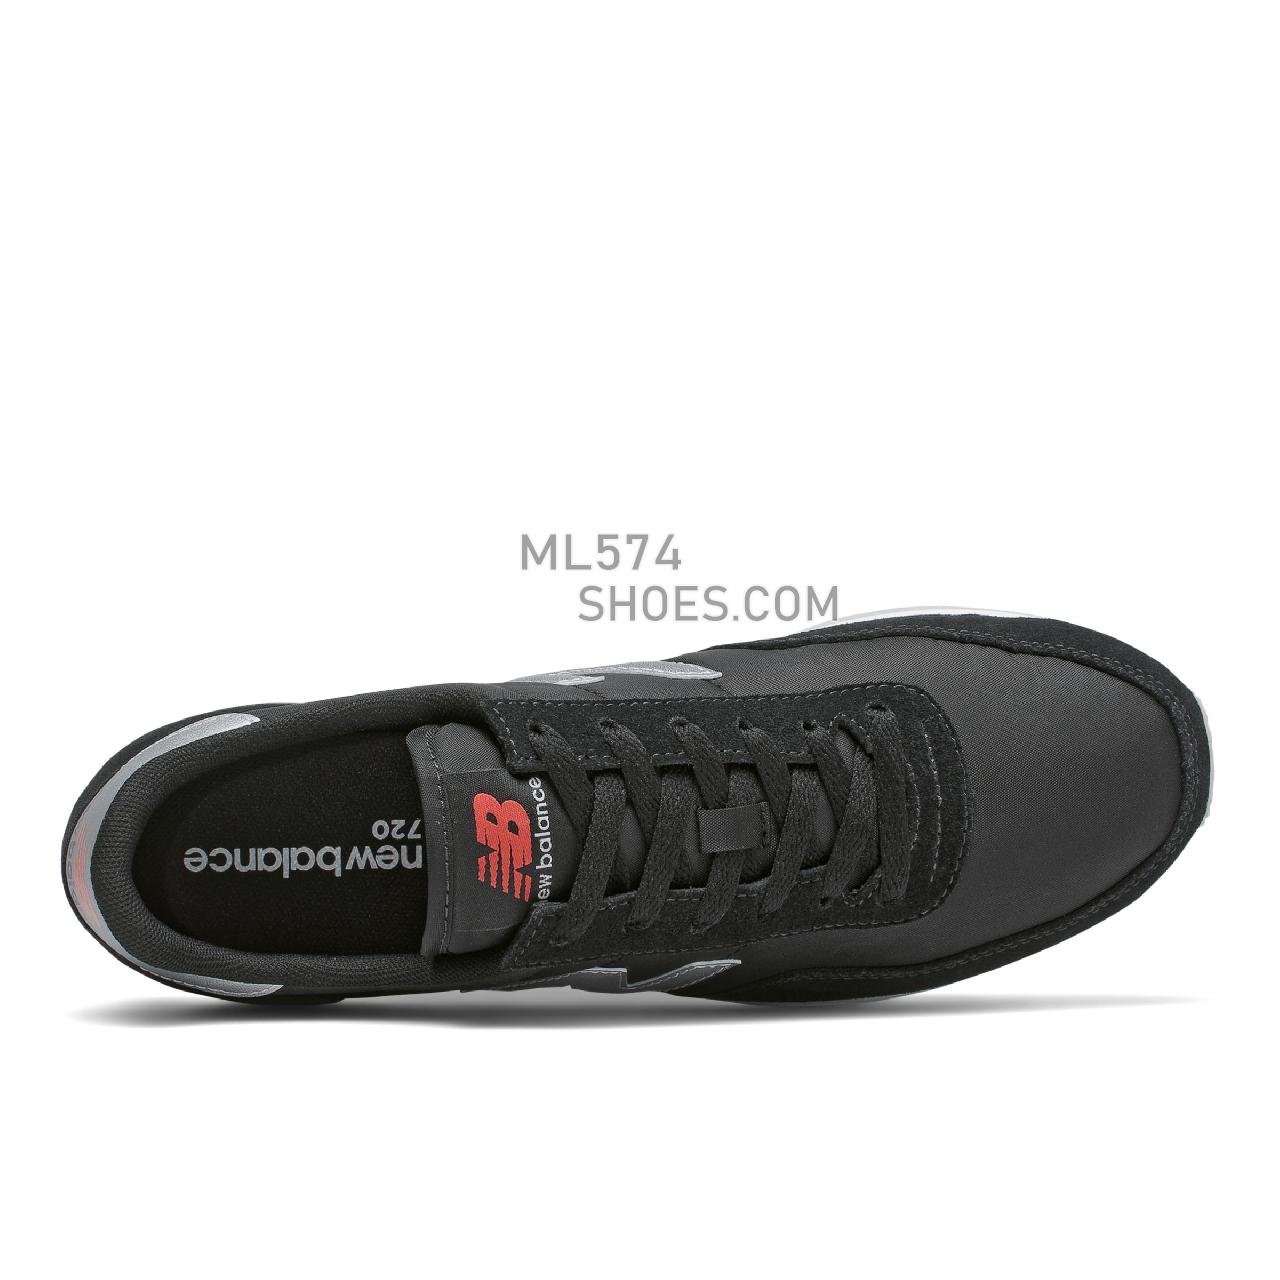 New Balance 720 - Unisex Men's Women's Classic Sneakers - Black with Ghost Pepper - UL720NN1